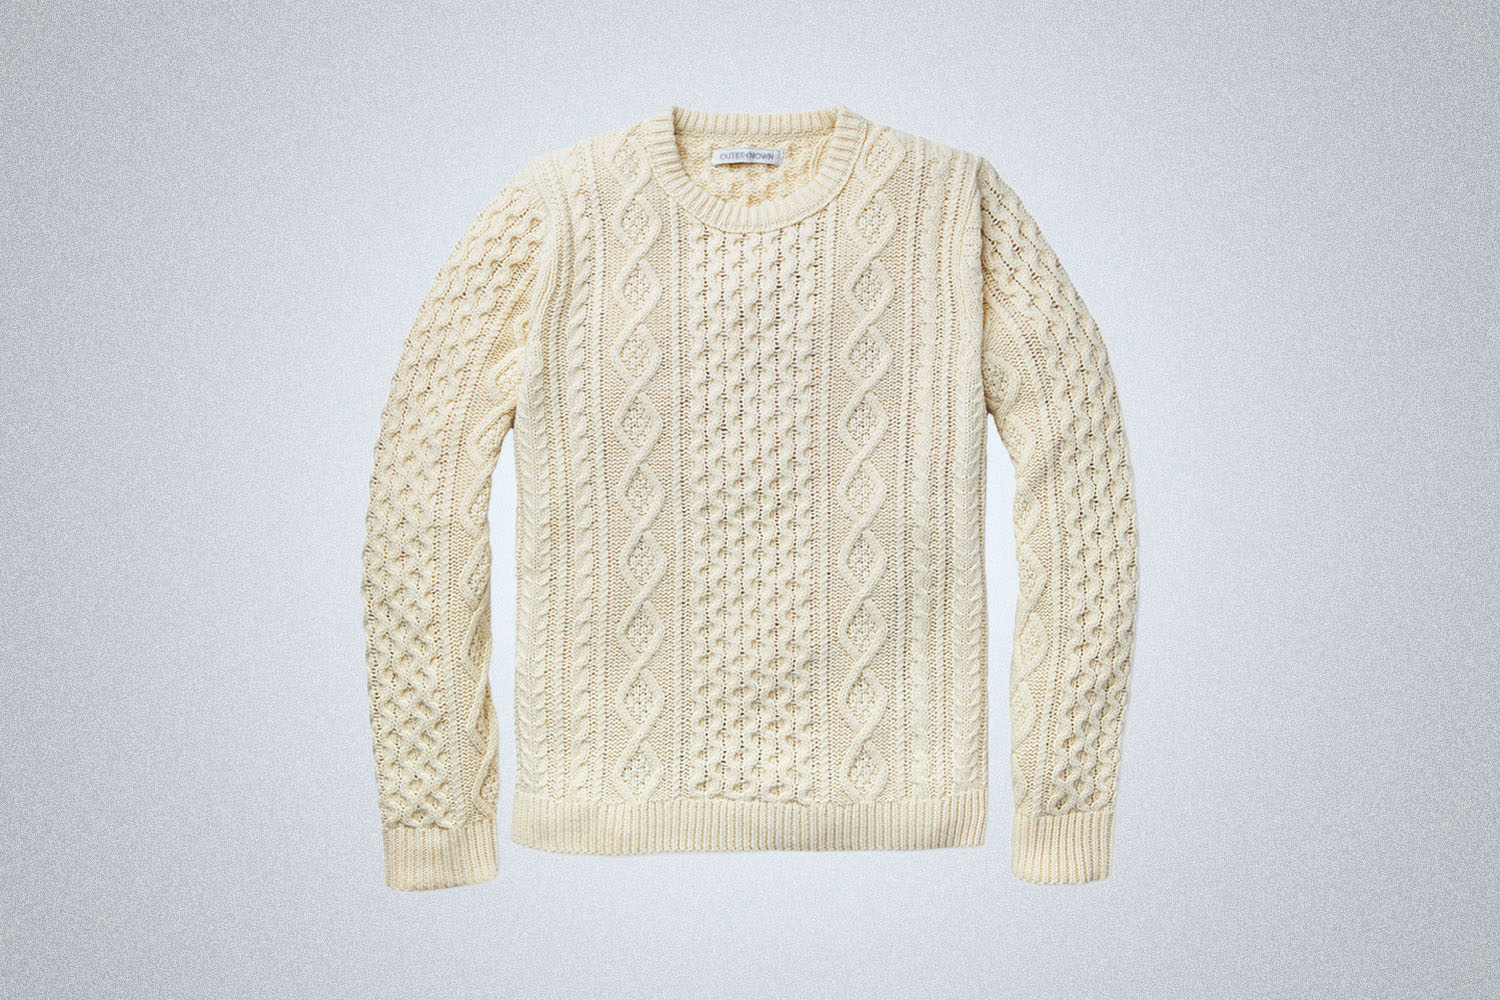 a cream fishermans sweater